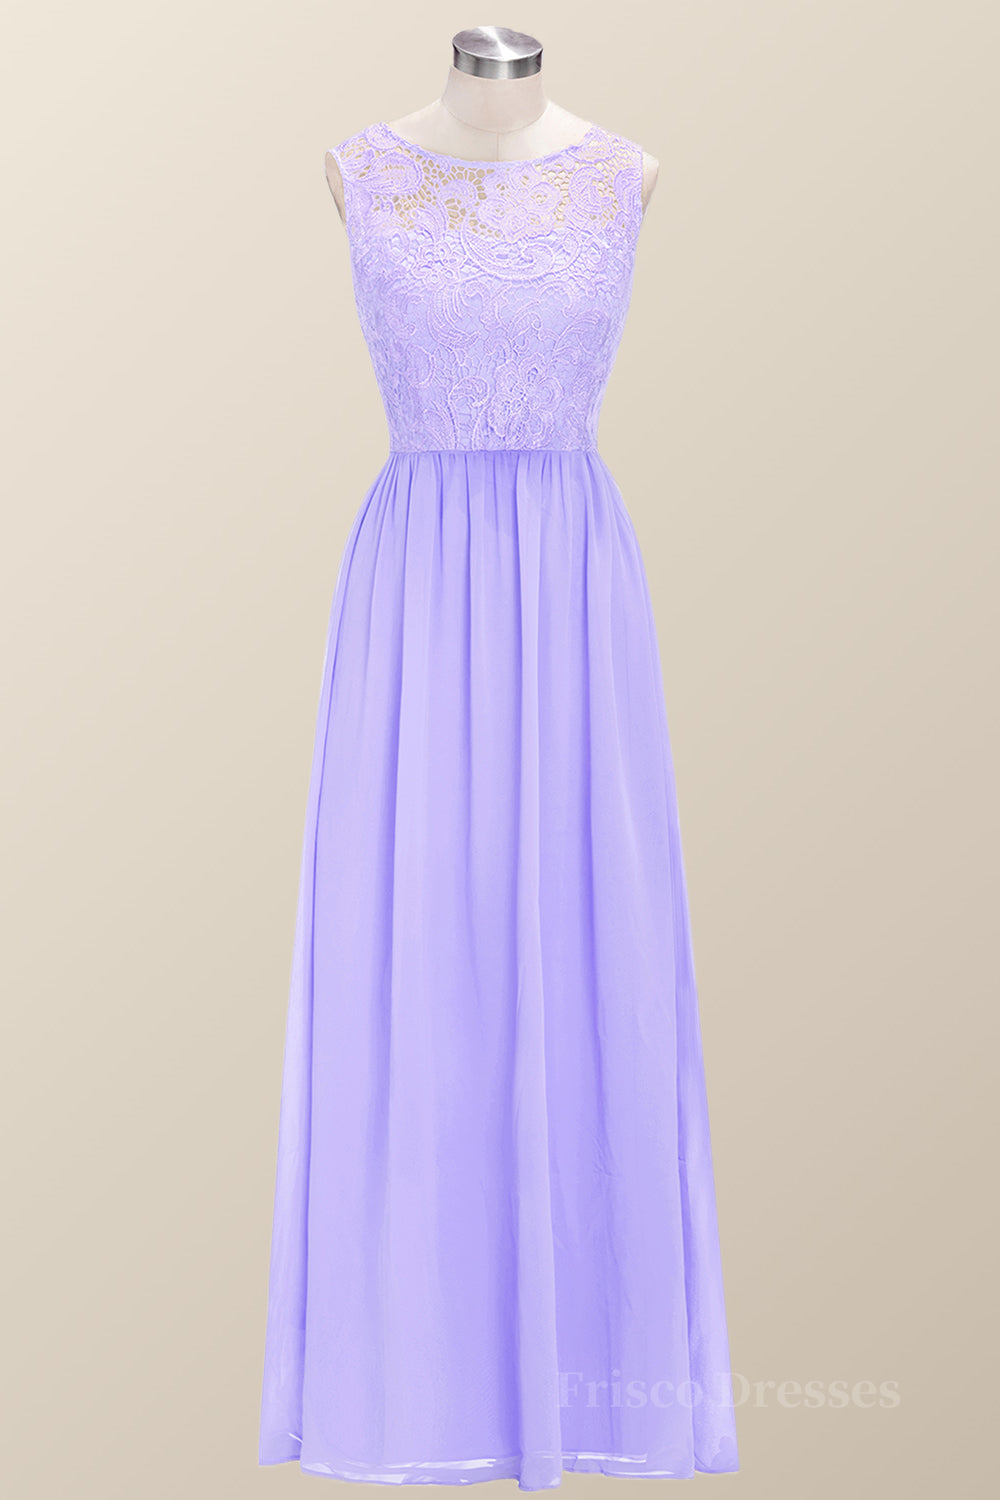 Scoop Lavender Lace and Chiffon Long Bridesmaid Dress